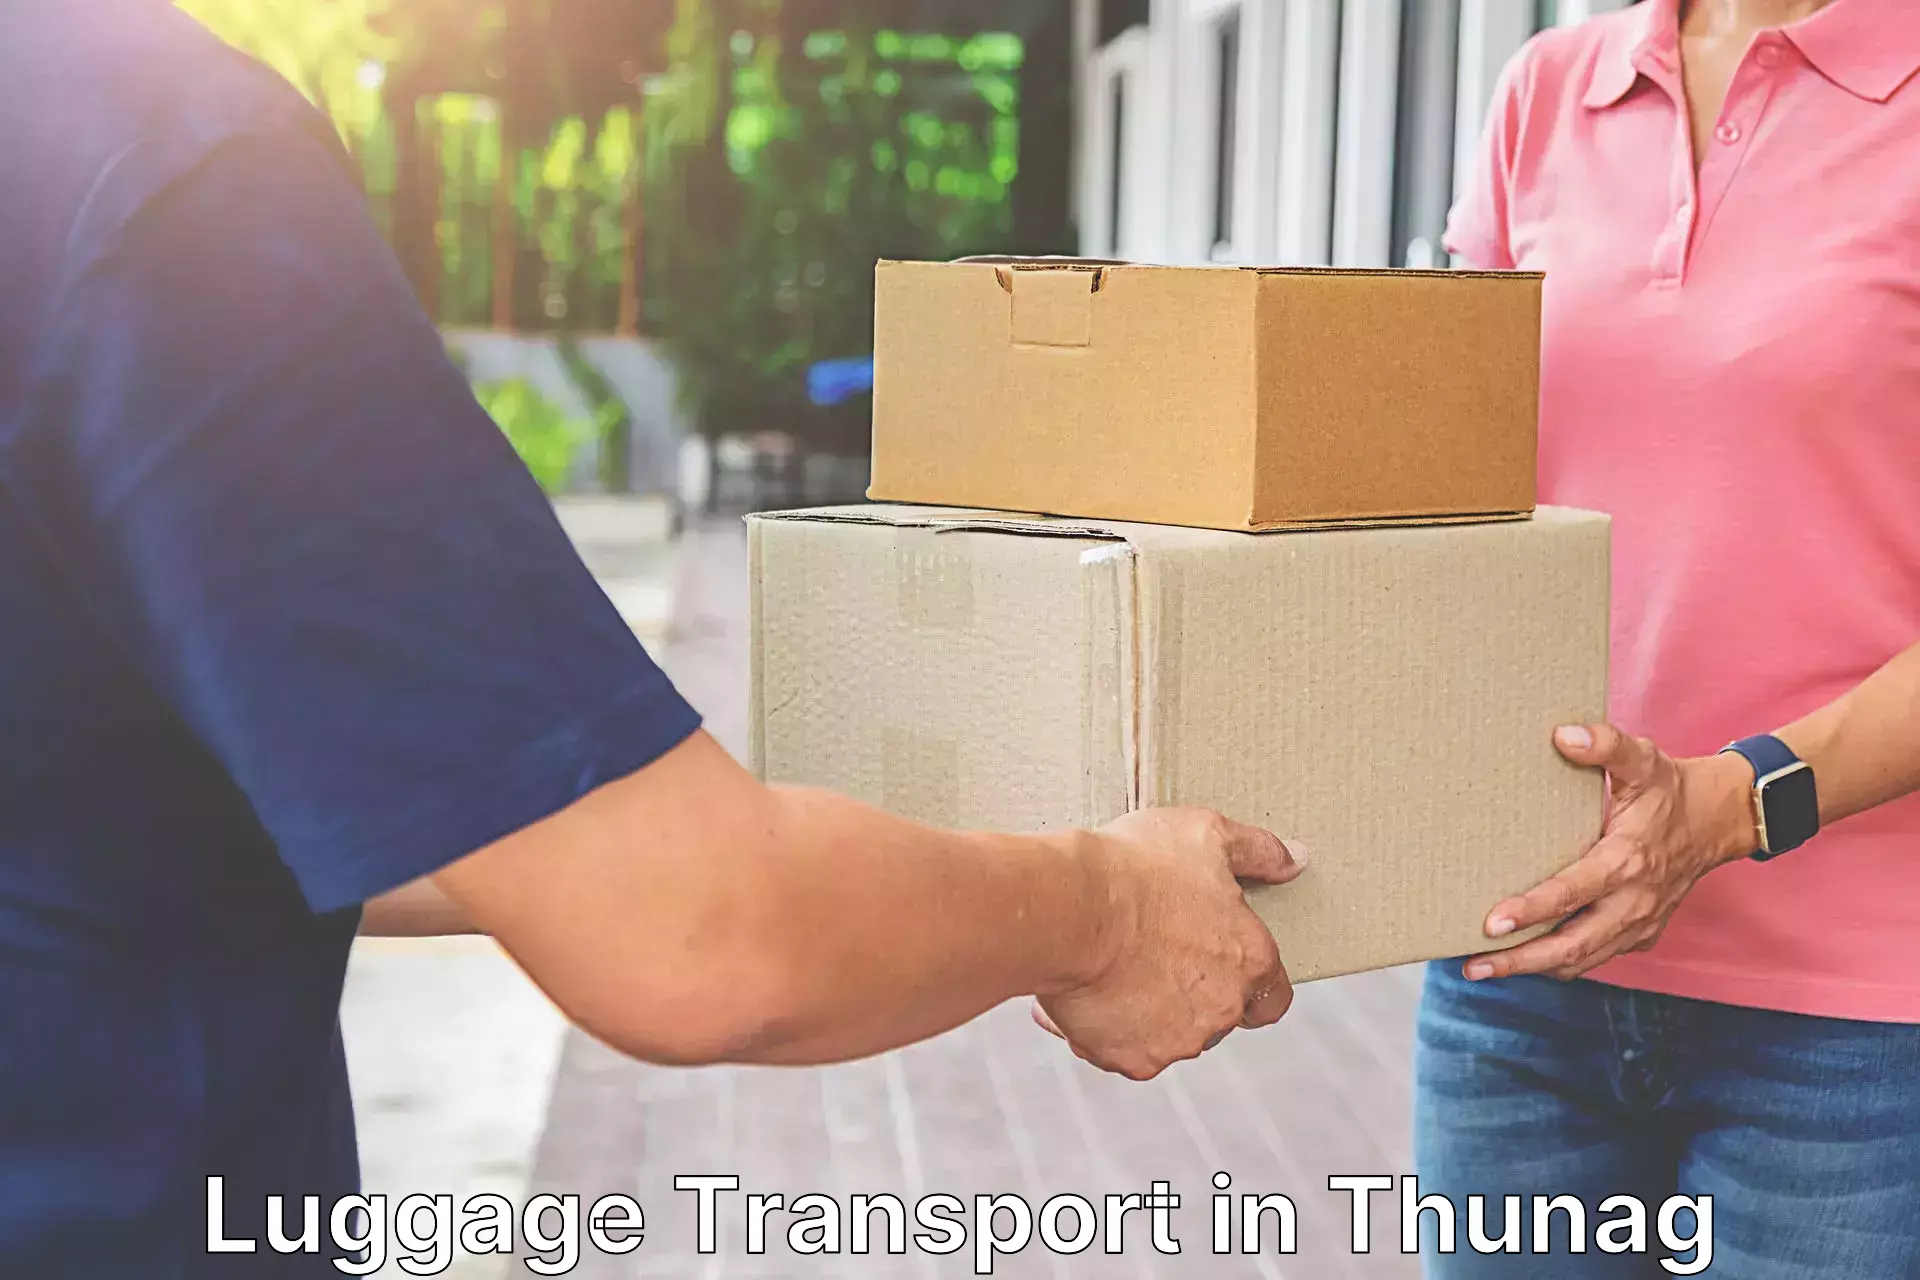 Corporate baggage transport in Thunag